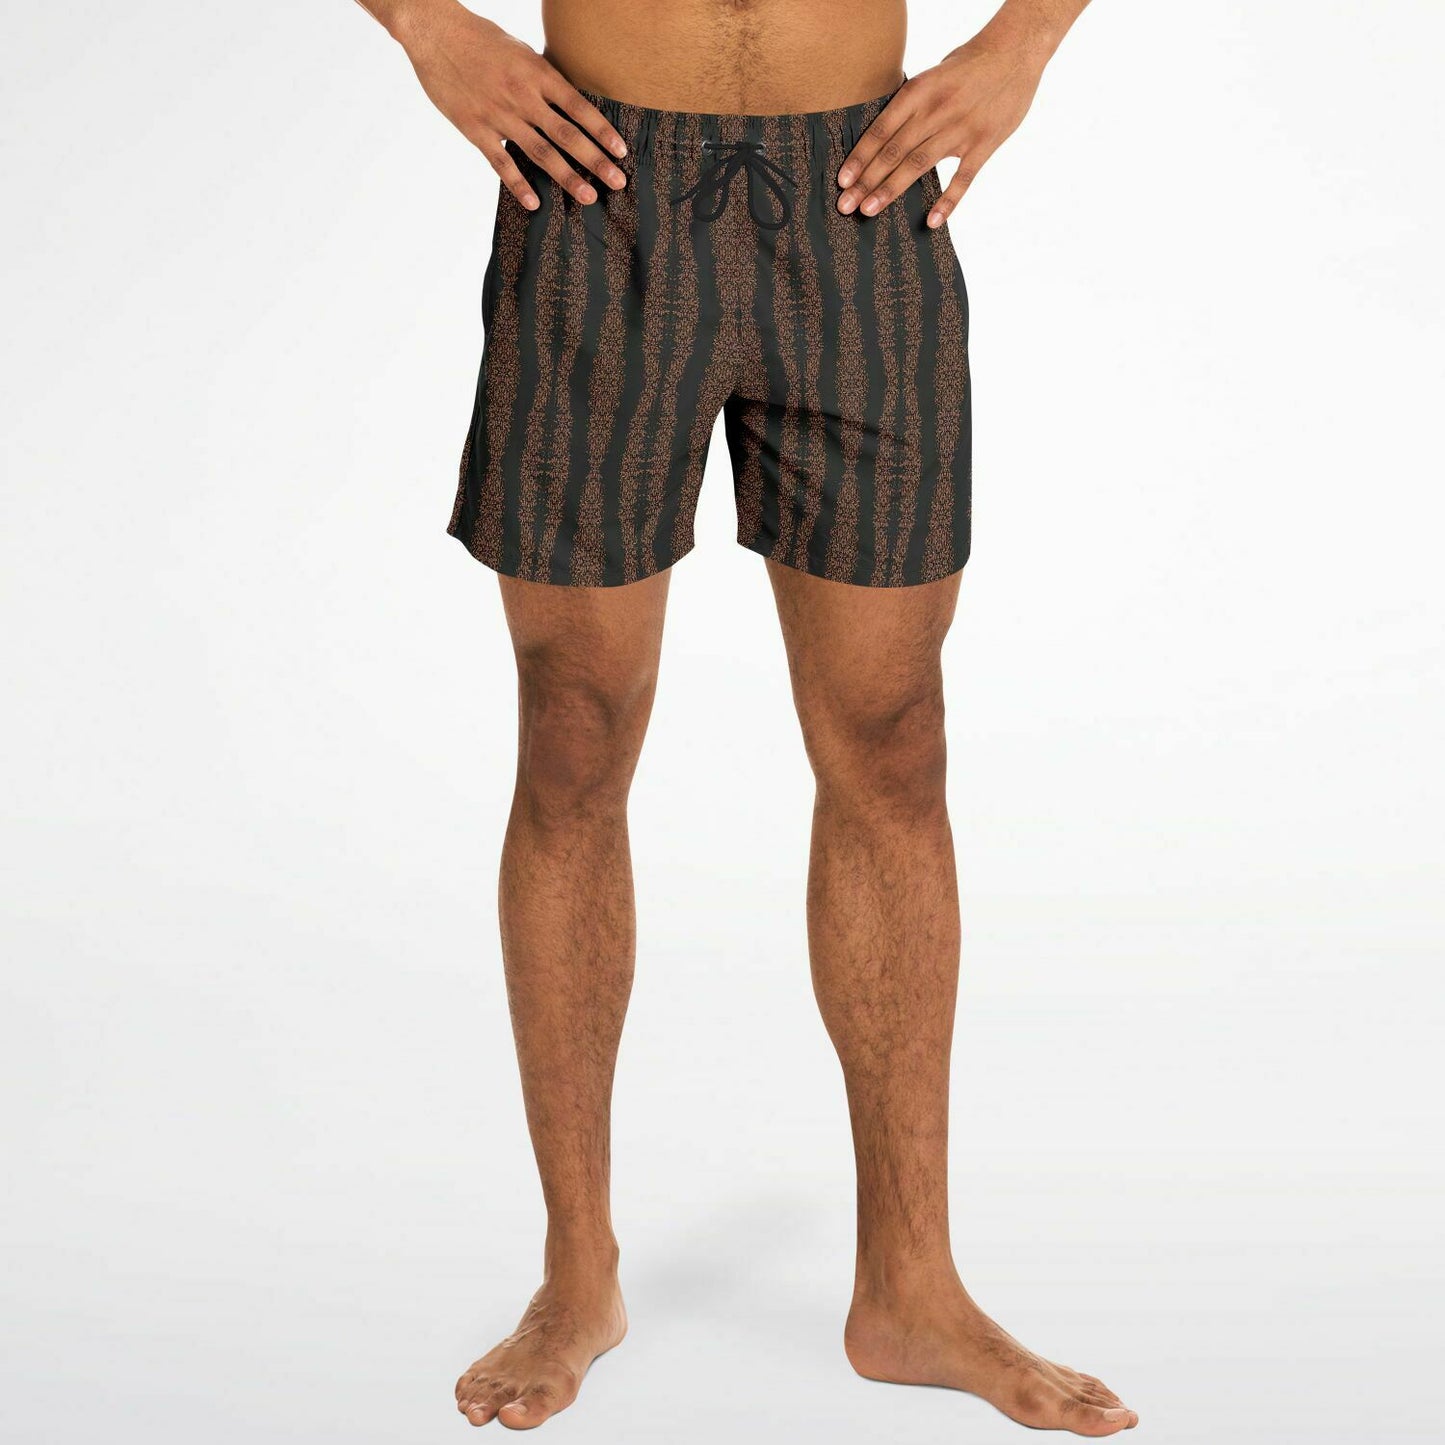 mens swim trunks in black pattern